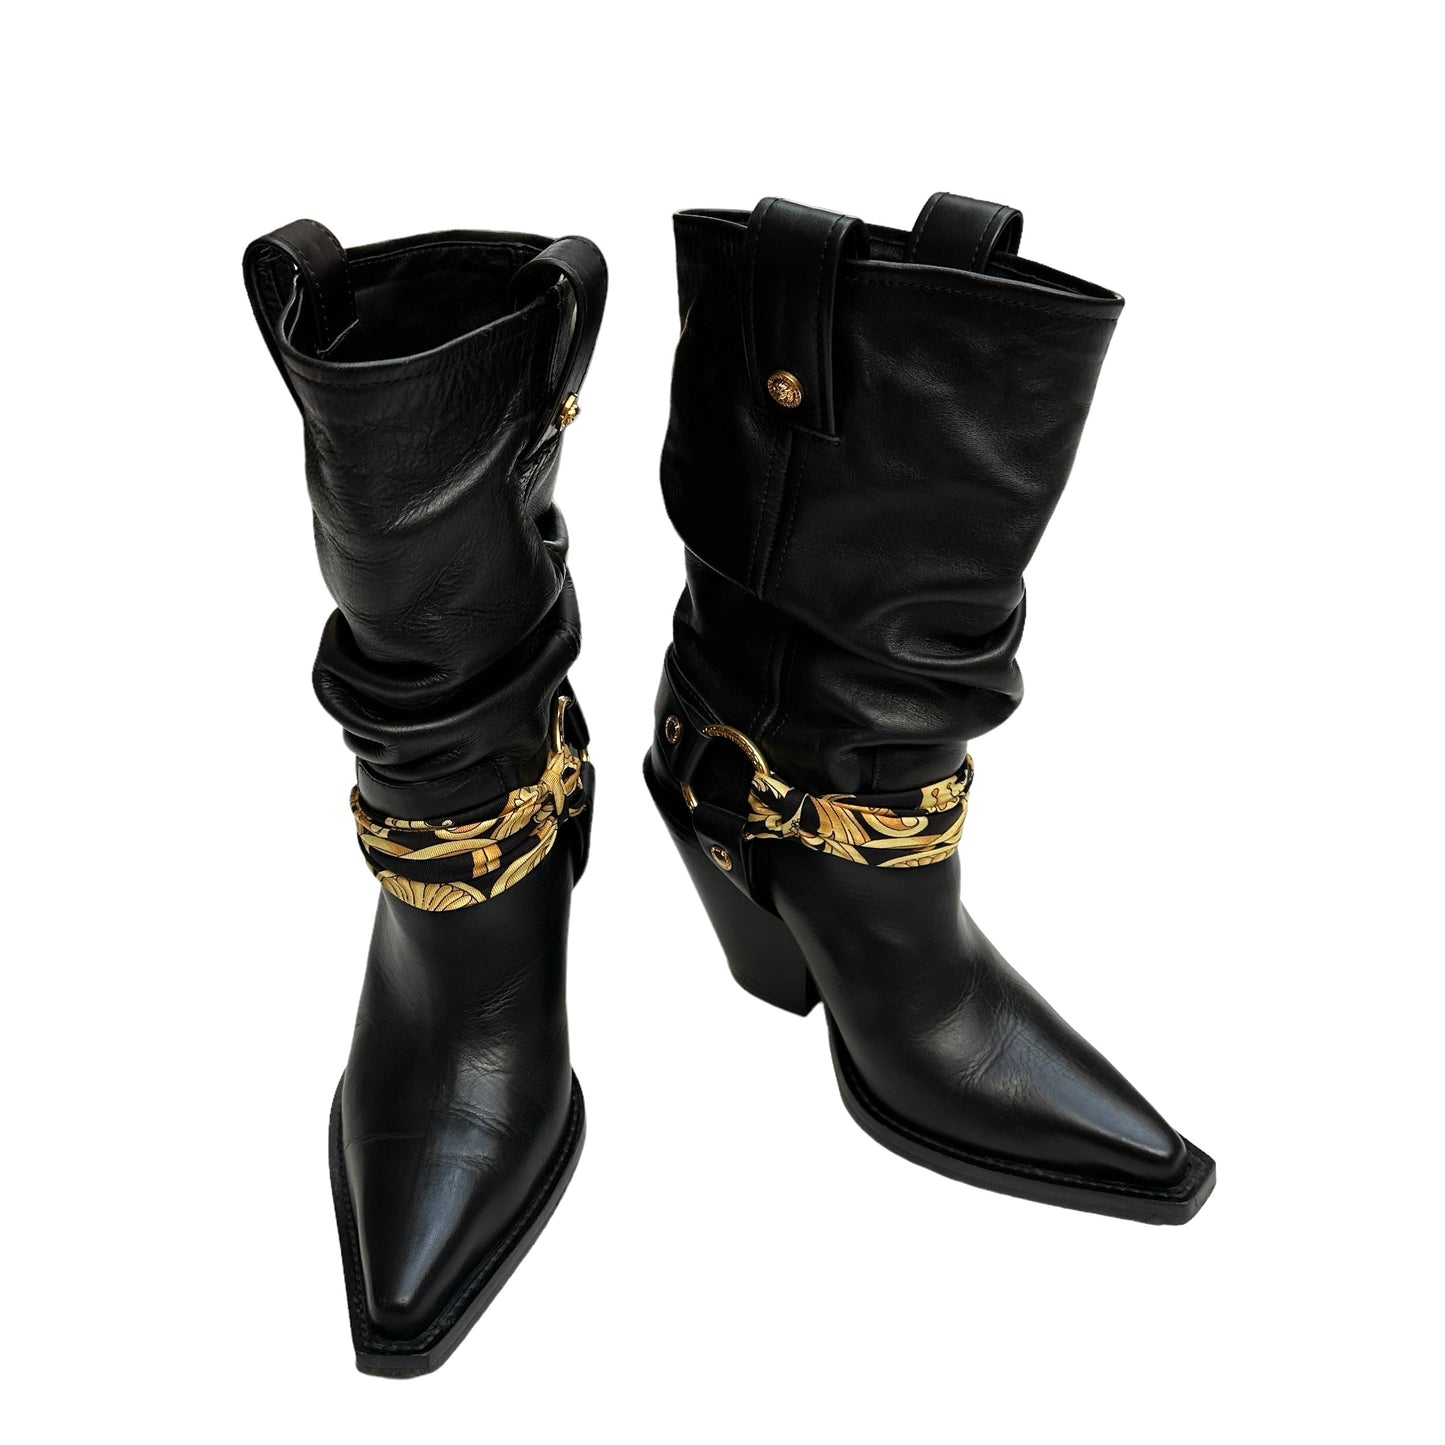 Black Cowboy Heeled Boots - 5.5